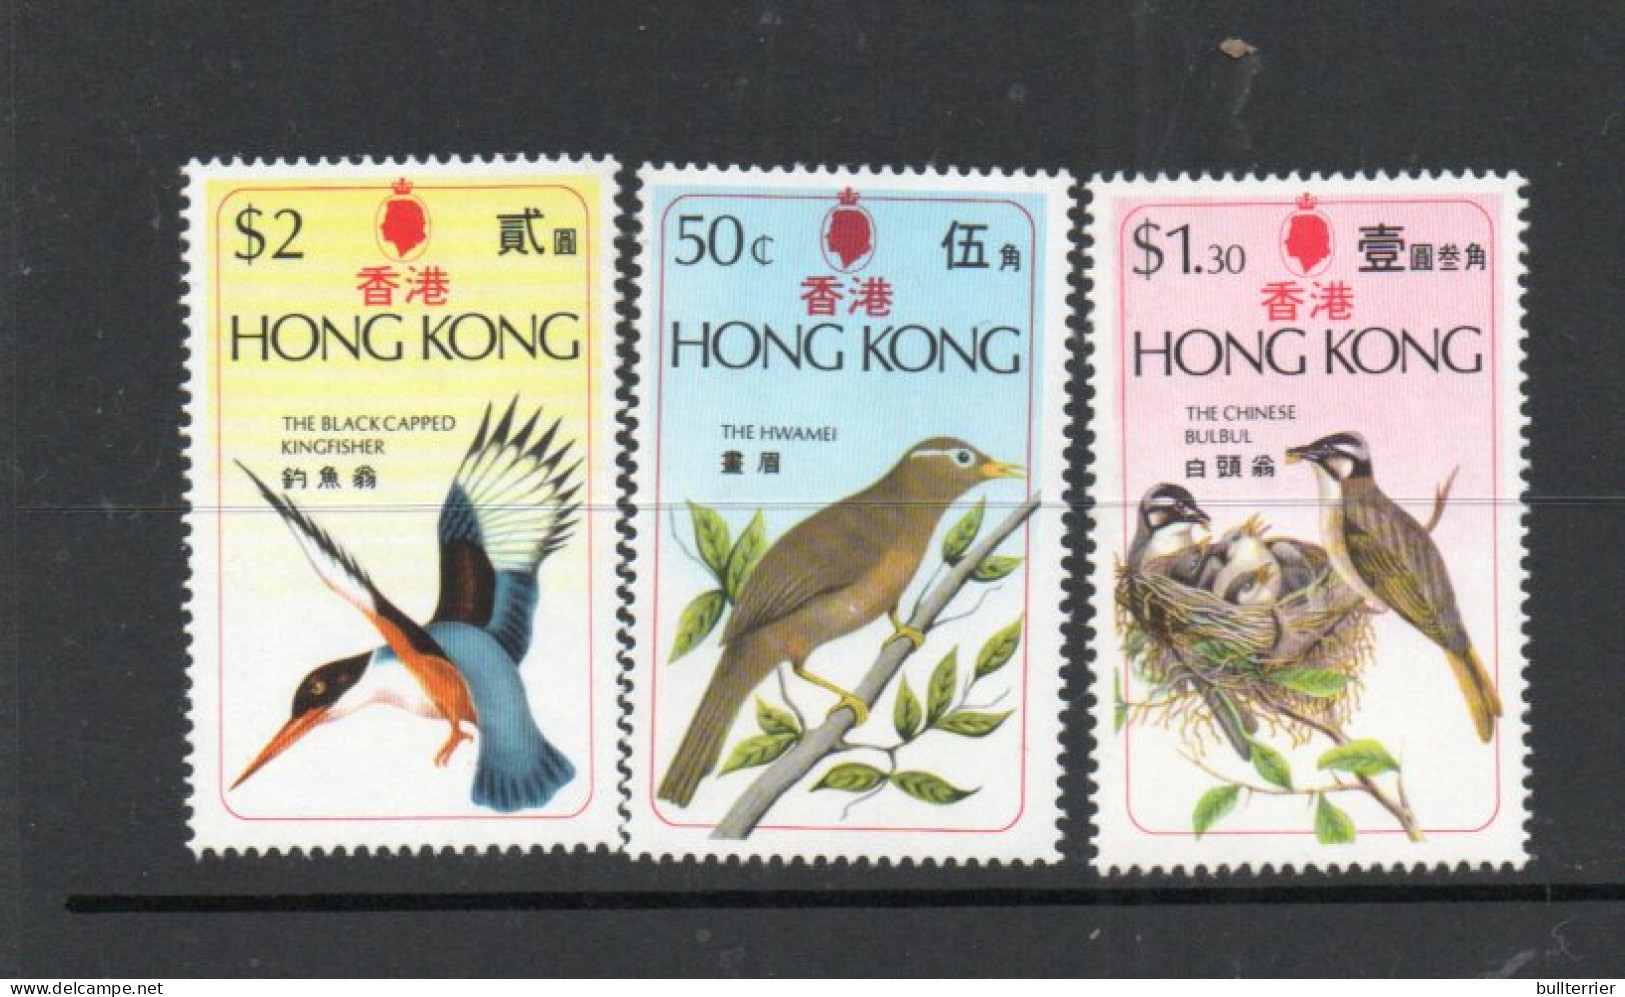 BIRDS - HONG KONG  - 1975- BIRDS SET OF 3  MINT NEVER HINGED, SG CAT £17 - Galline & Gallinaceo